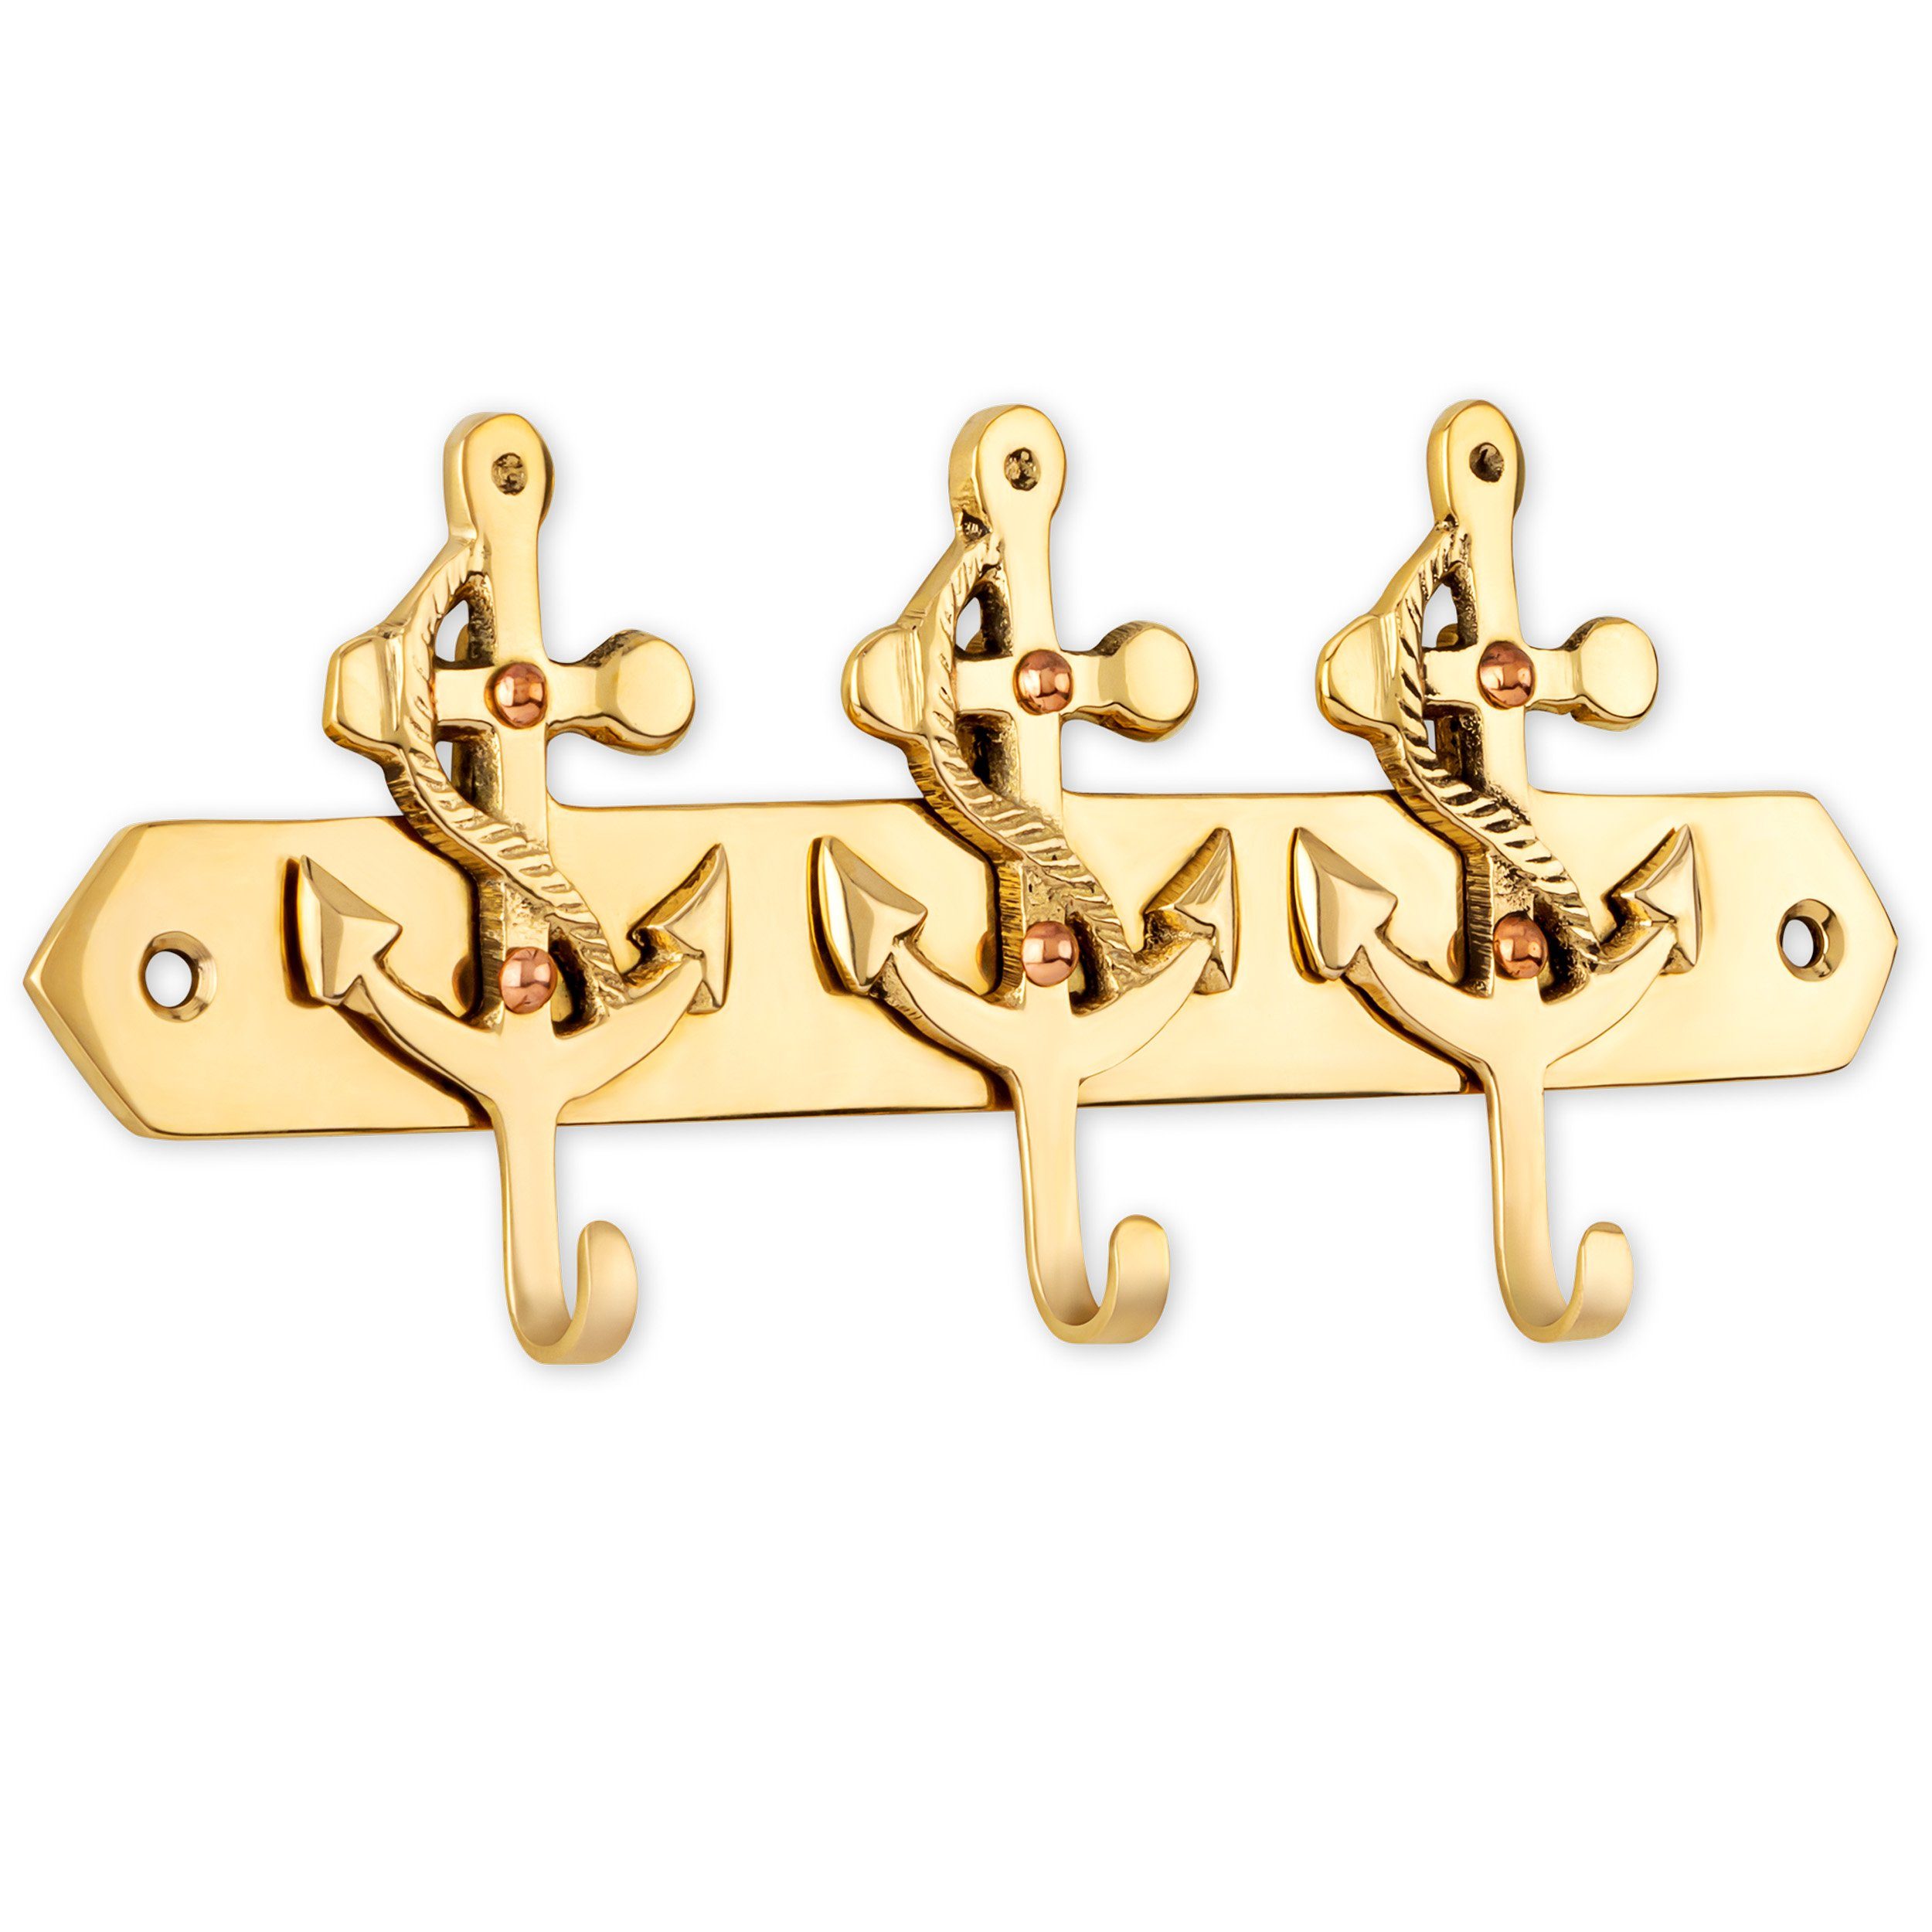 NKlaus Dekofigur Schlüsselhaken Anker 3-fach aus Messing gold 16 x 7 cm Maritim Schlüss, Made in Germany